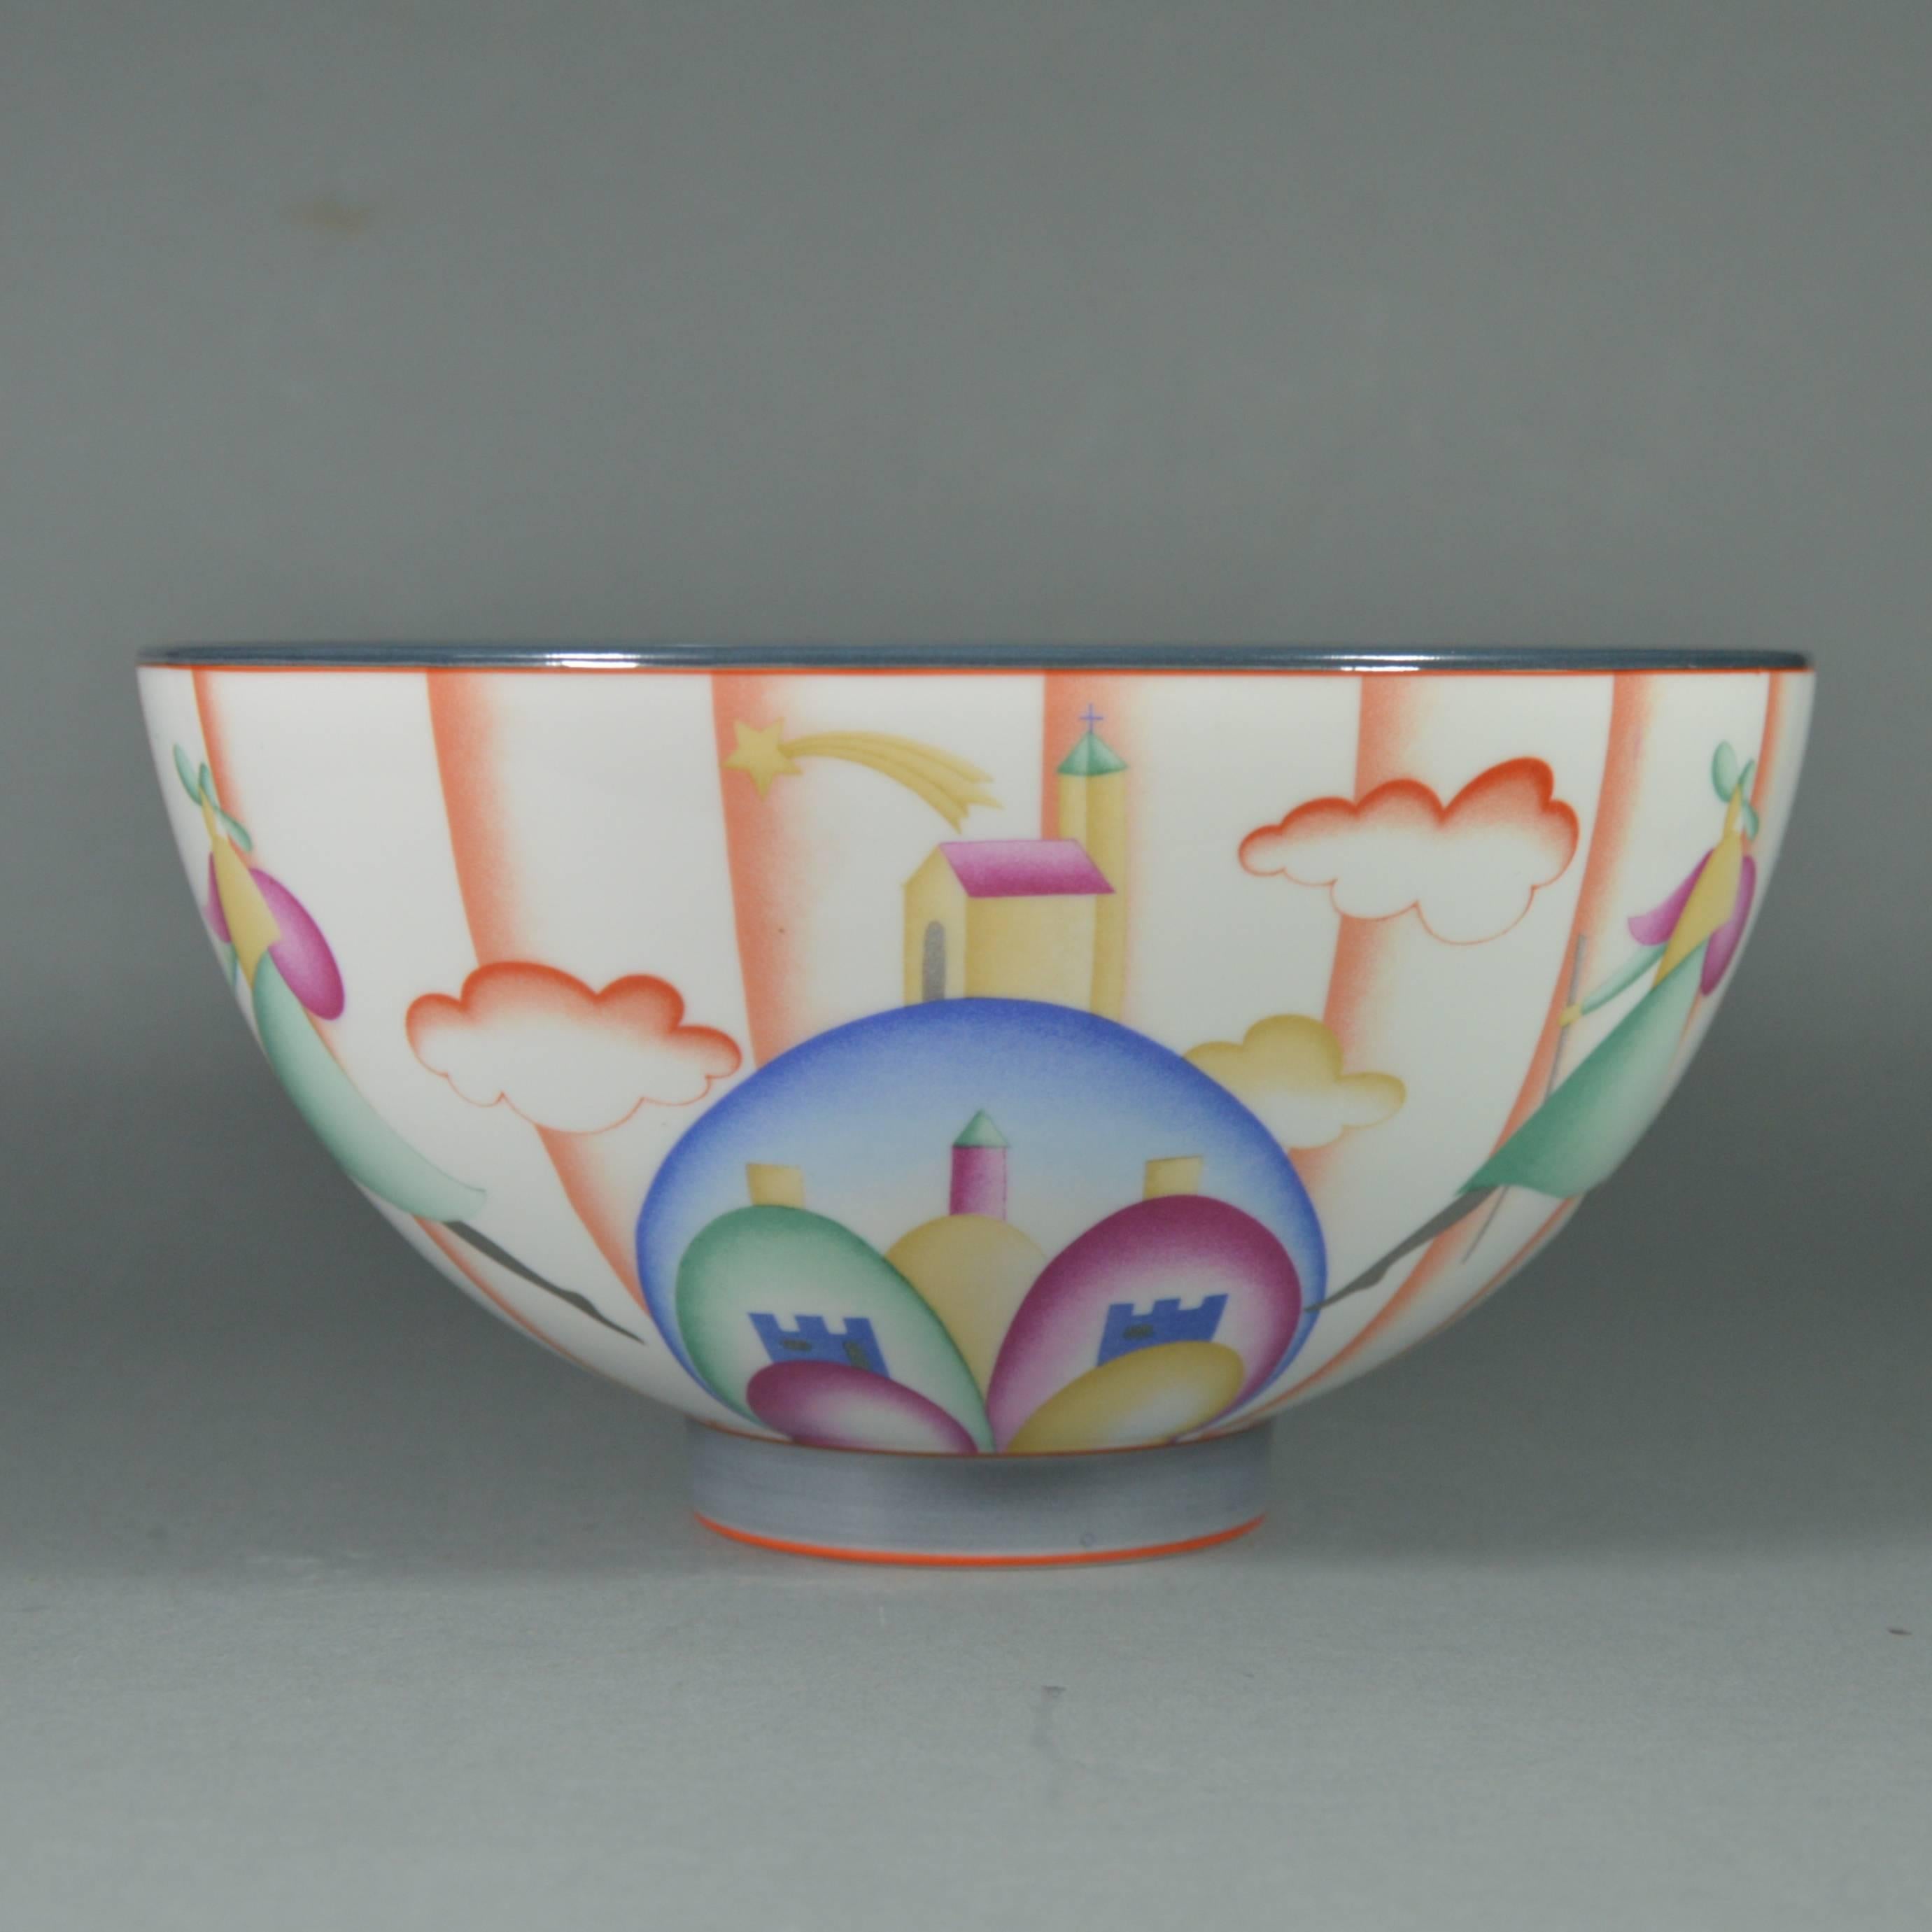 Gio Ponti Art Deco Porcelain Bowl Il Pellegrino di Montesanto, 1925 In Excellent Condition For Sale In Brussels, BE